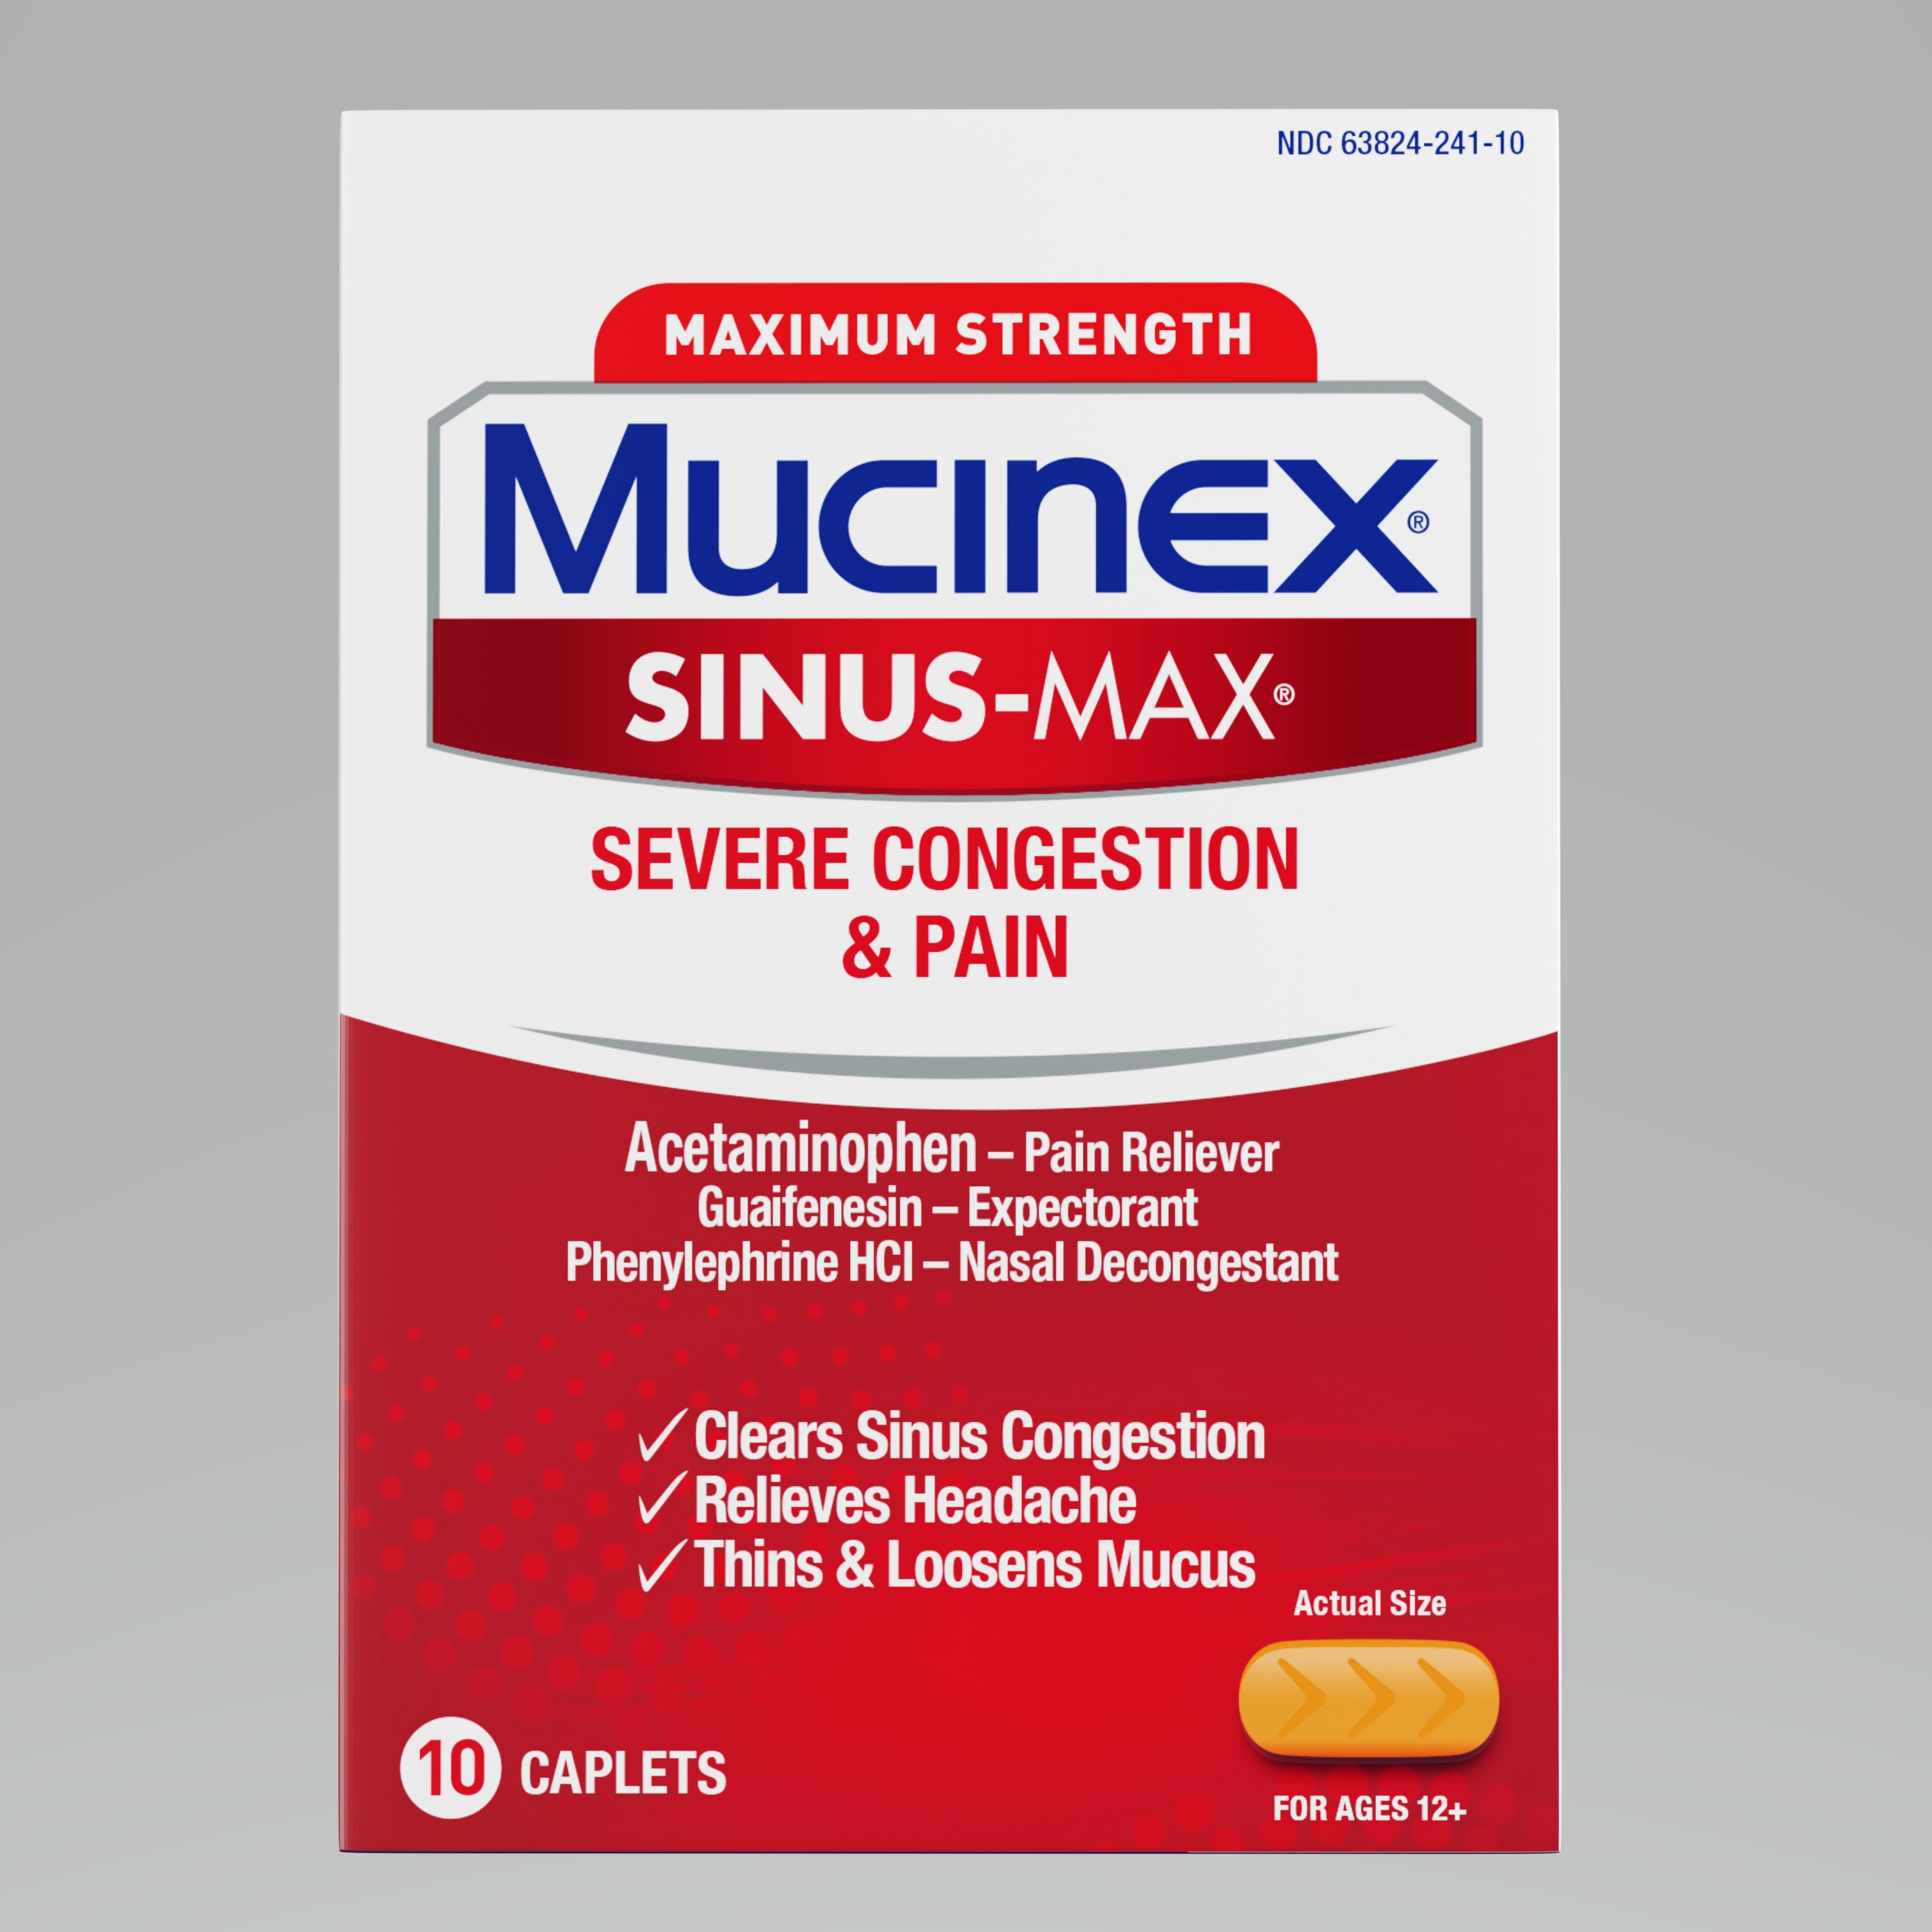 MUCINEX® SINUS-MAX® - Severe Congestion & Pain